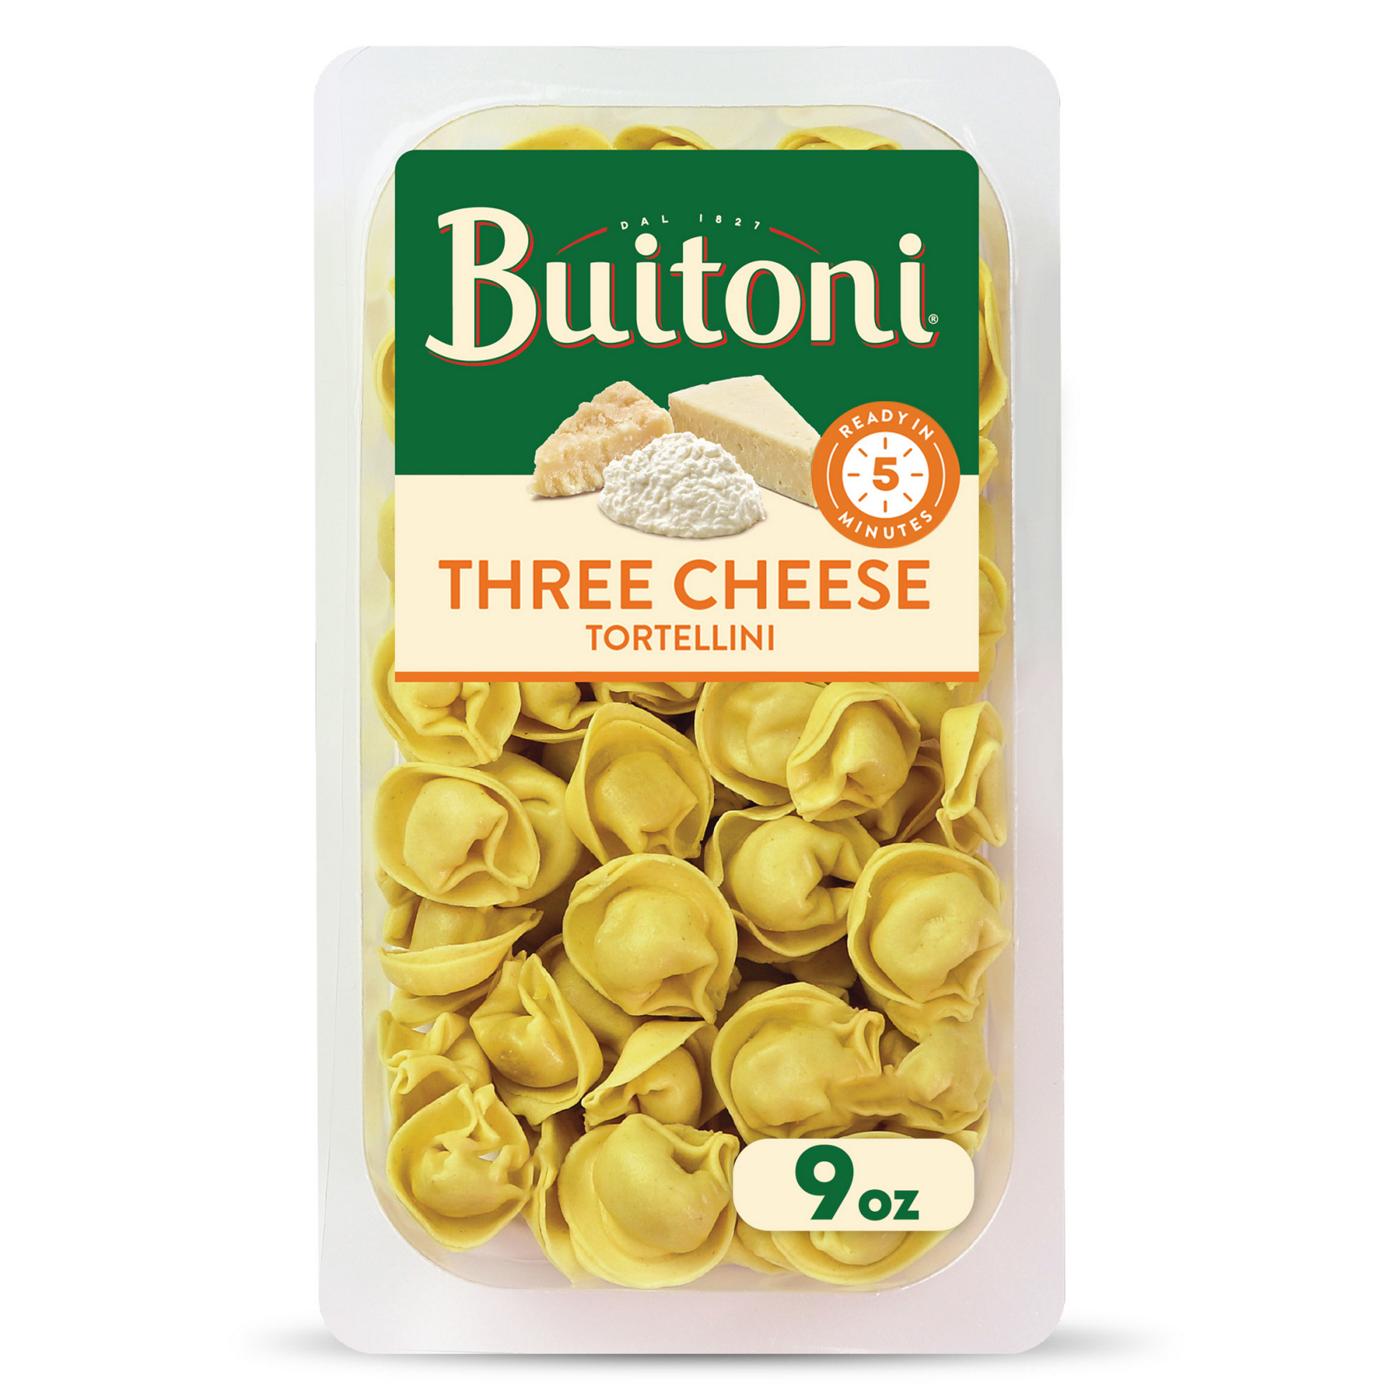 Buitoni Three Cheese Tortellini; image 1 of 5